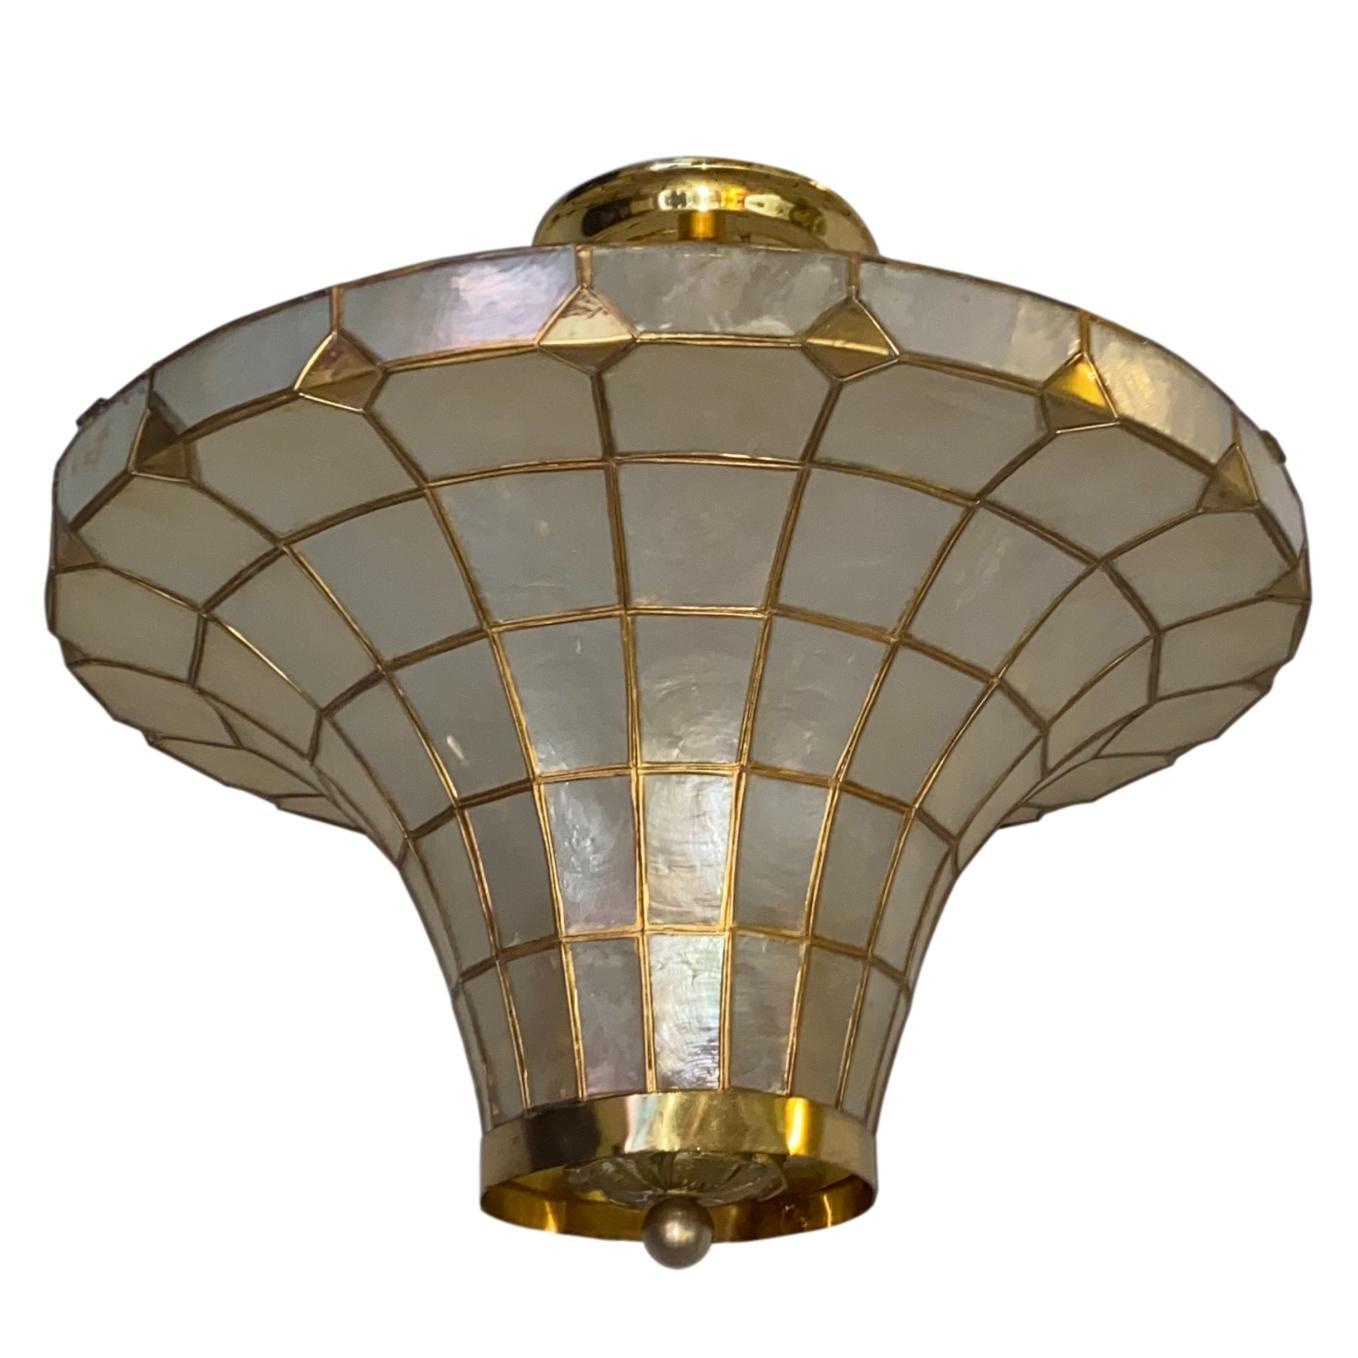 A late 1940's French capiz pendant light fixture with four interior lights.

Measurements:
Drop: 16